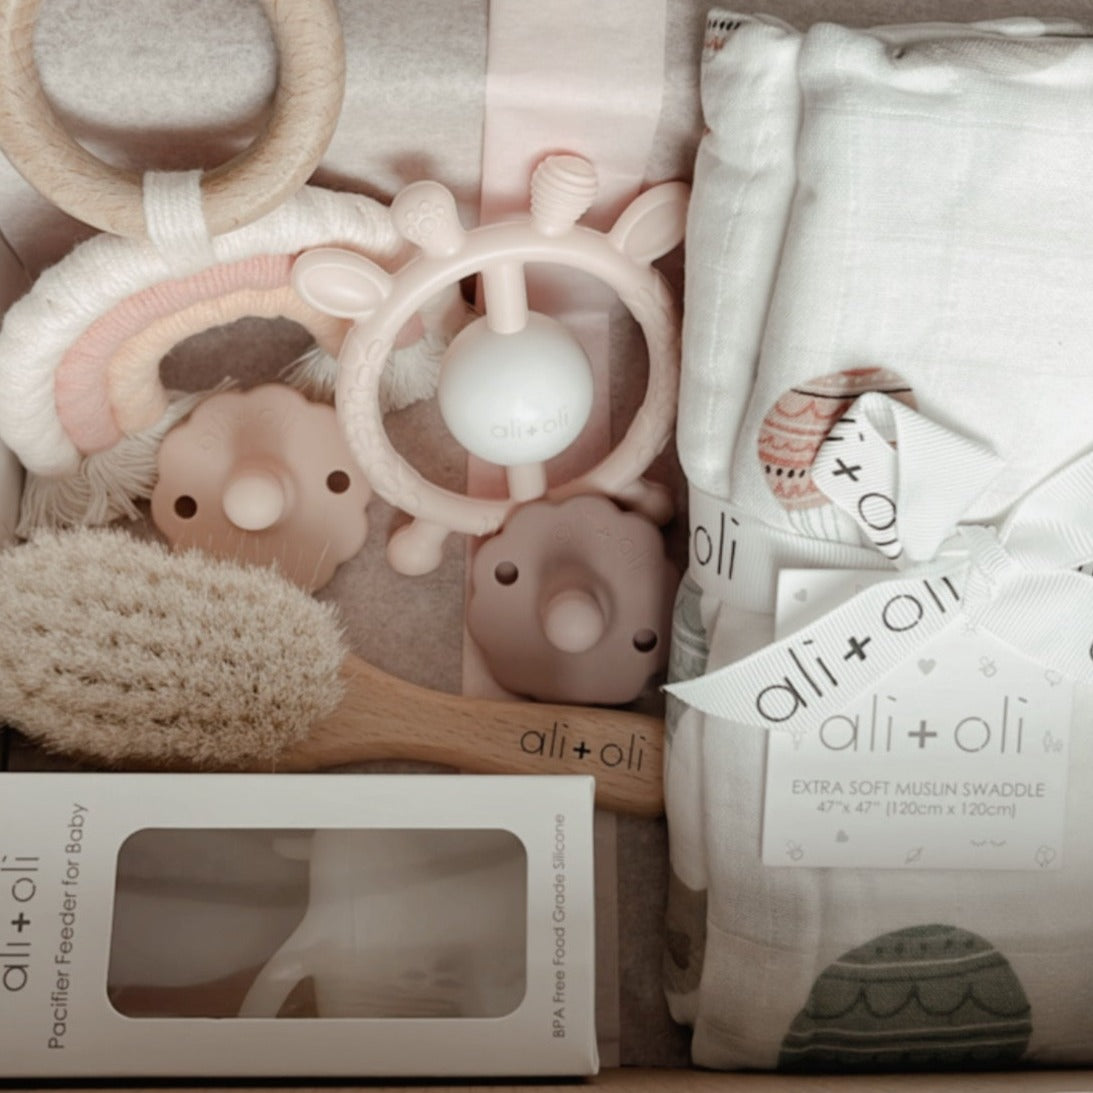 Ali+Oli Gift Box - Pretty in Pink & Whales